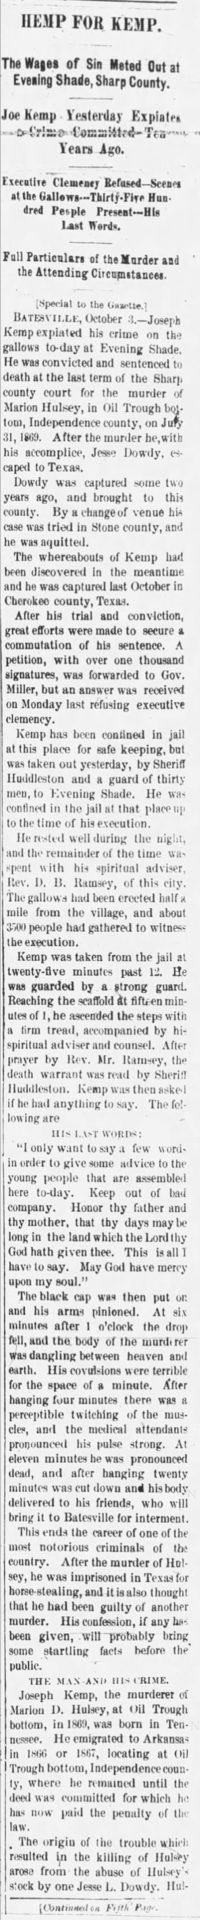 "Hemp for Kemp" newspaper clipping